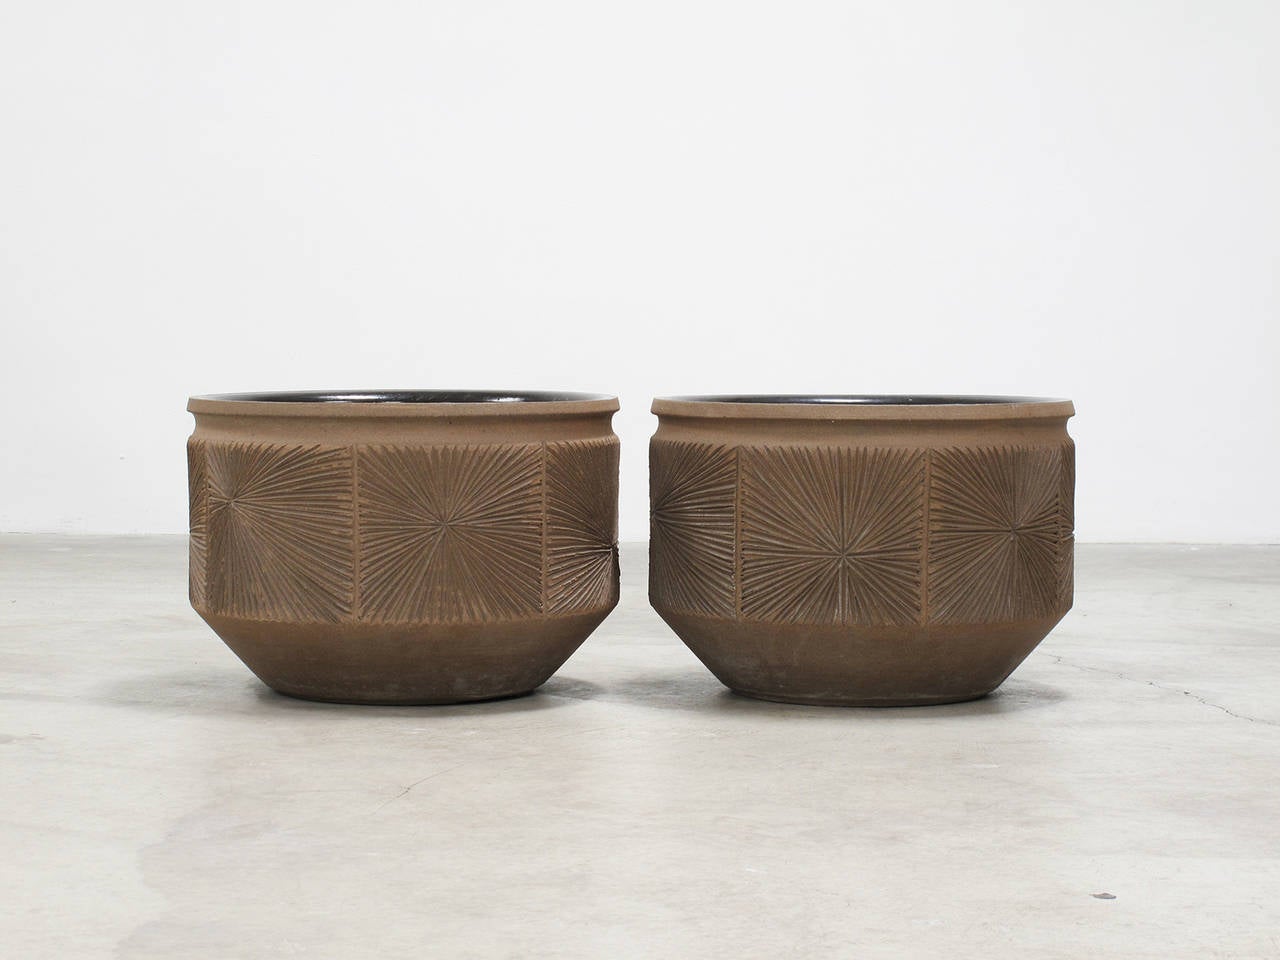 David Cressey & Robert Maxwell
'Sunburst' design ceramic vessels
Stoneware, black glazed interior with unglazed exterior, handmade
Earthgender Ceramics
California, 1970s
12.75 high x 18.5 diameter inches